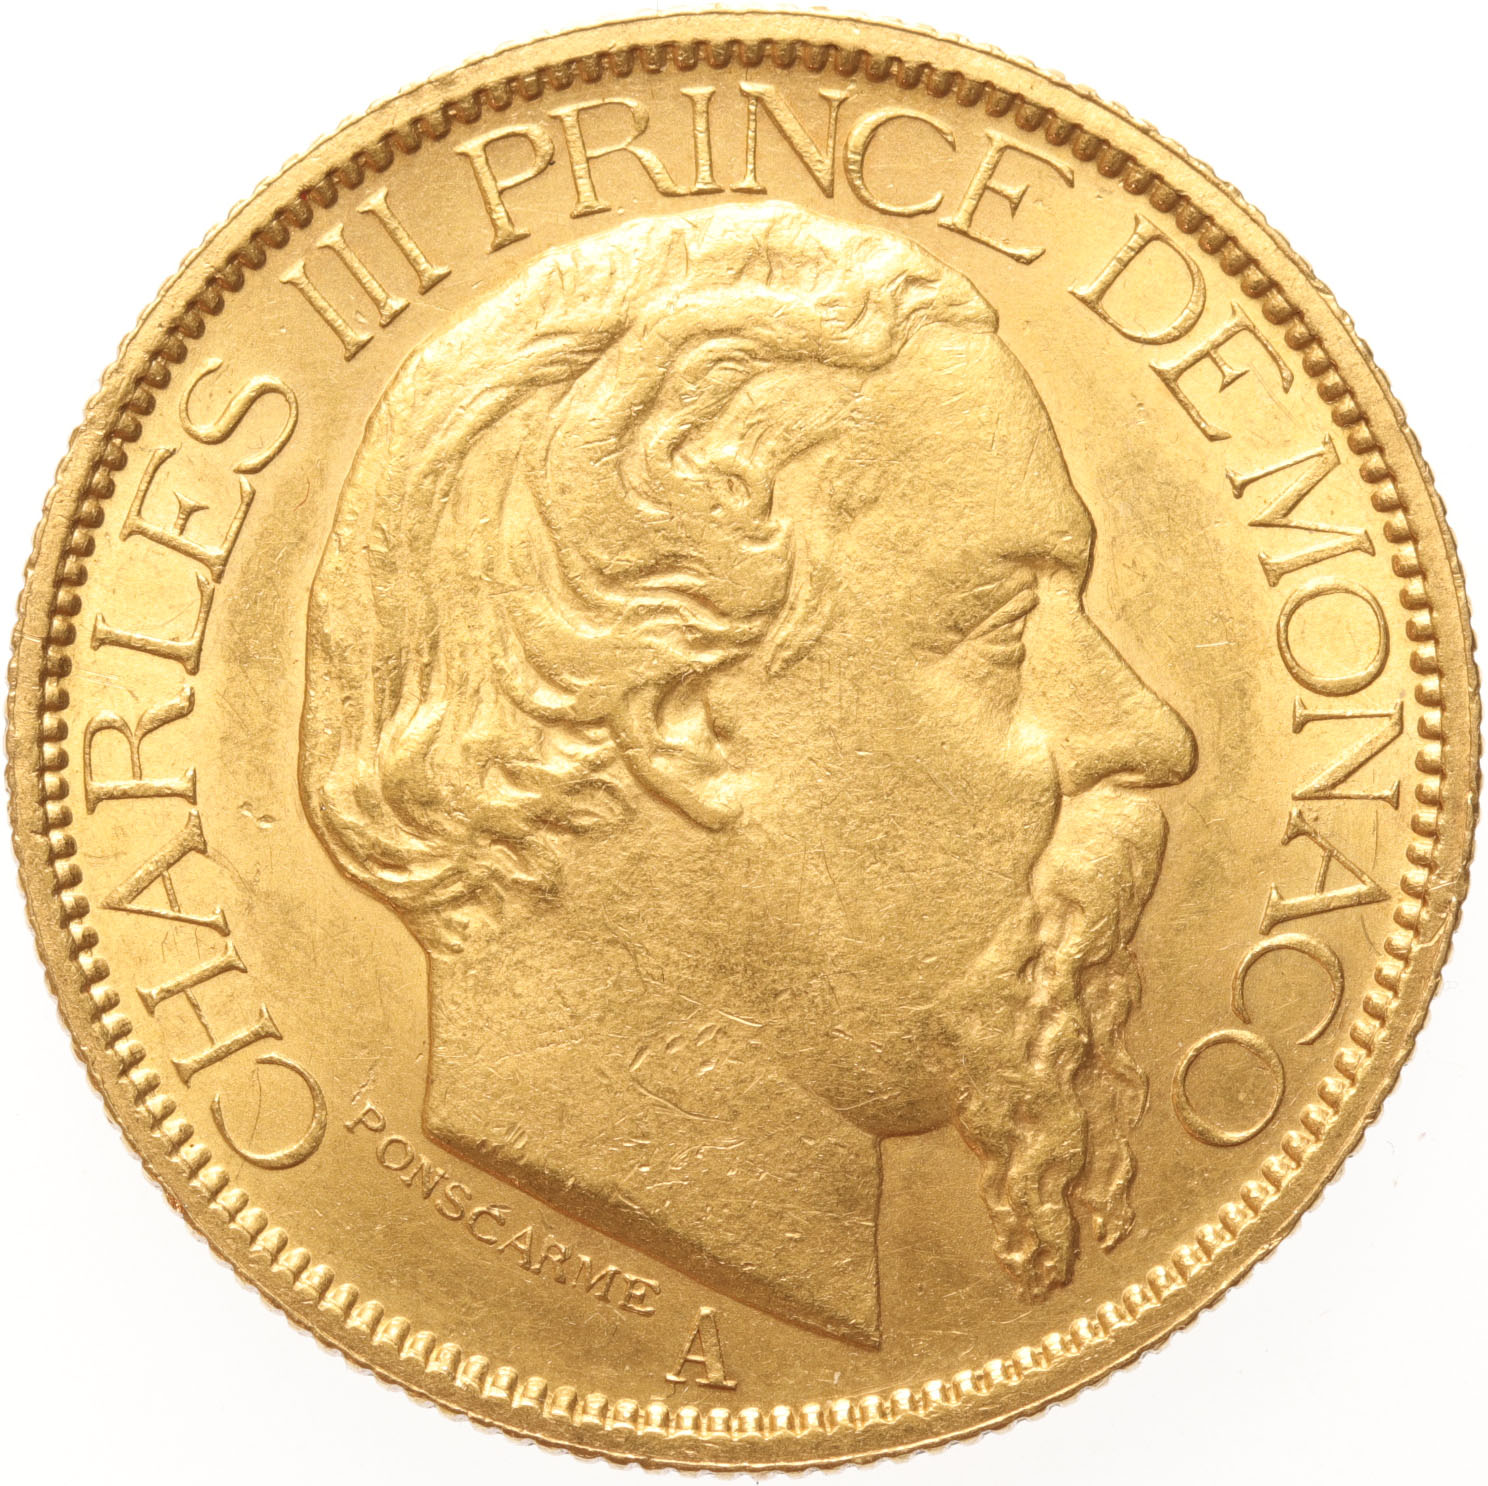 Monaco 100 francs 1884